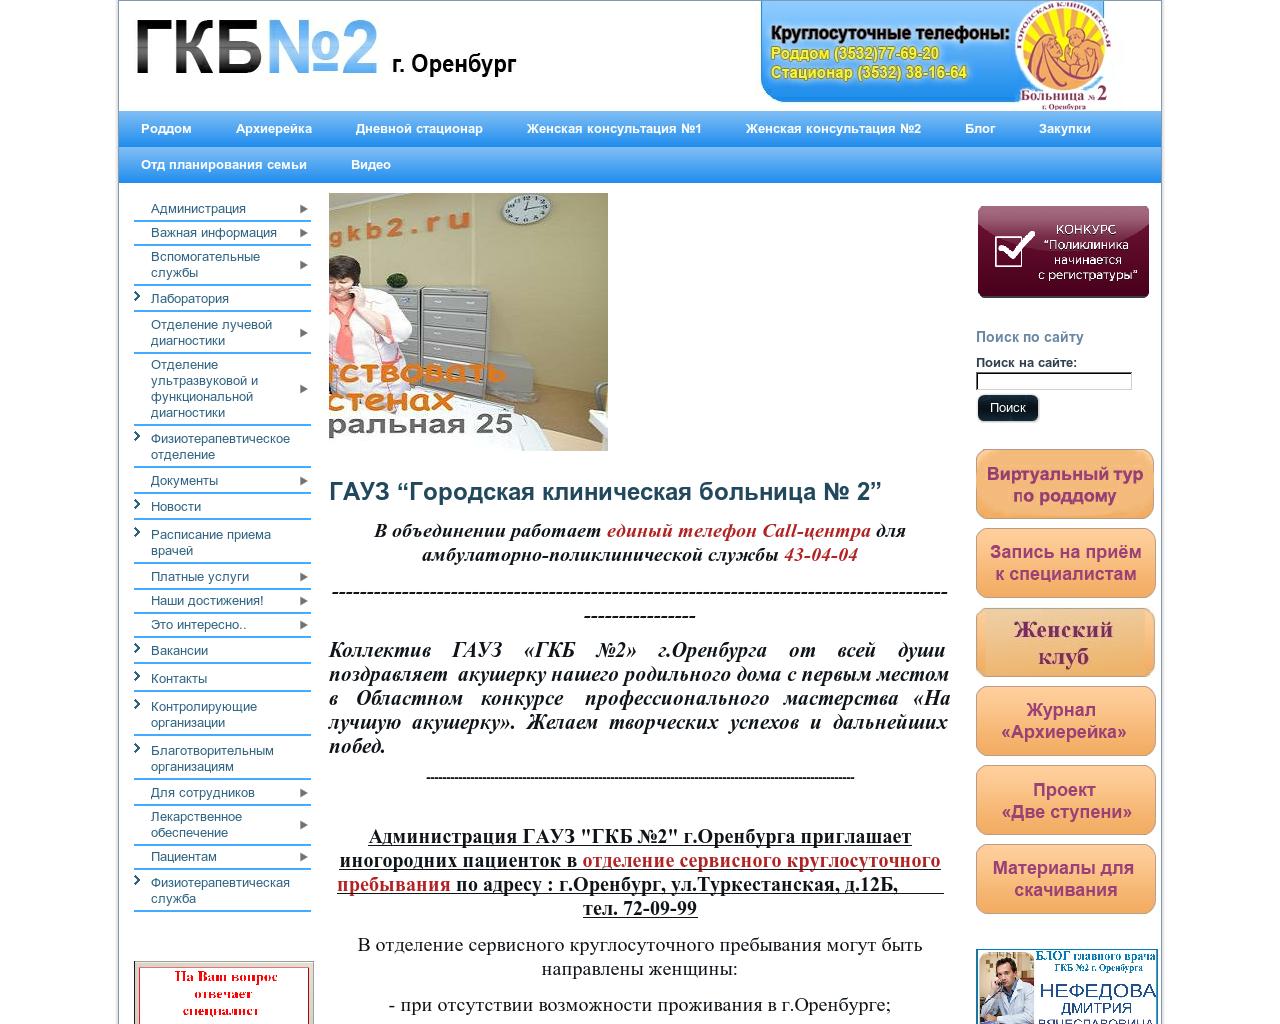 Изображение сайта mgkb2.ru в разрешении 1280x1024